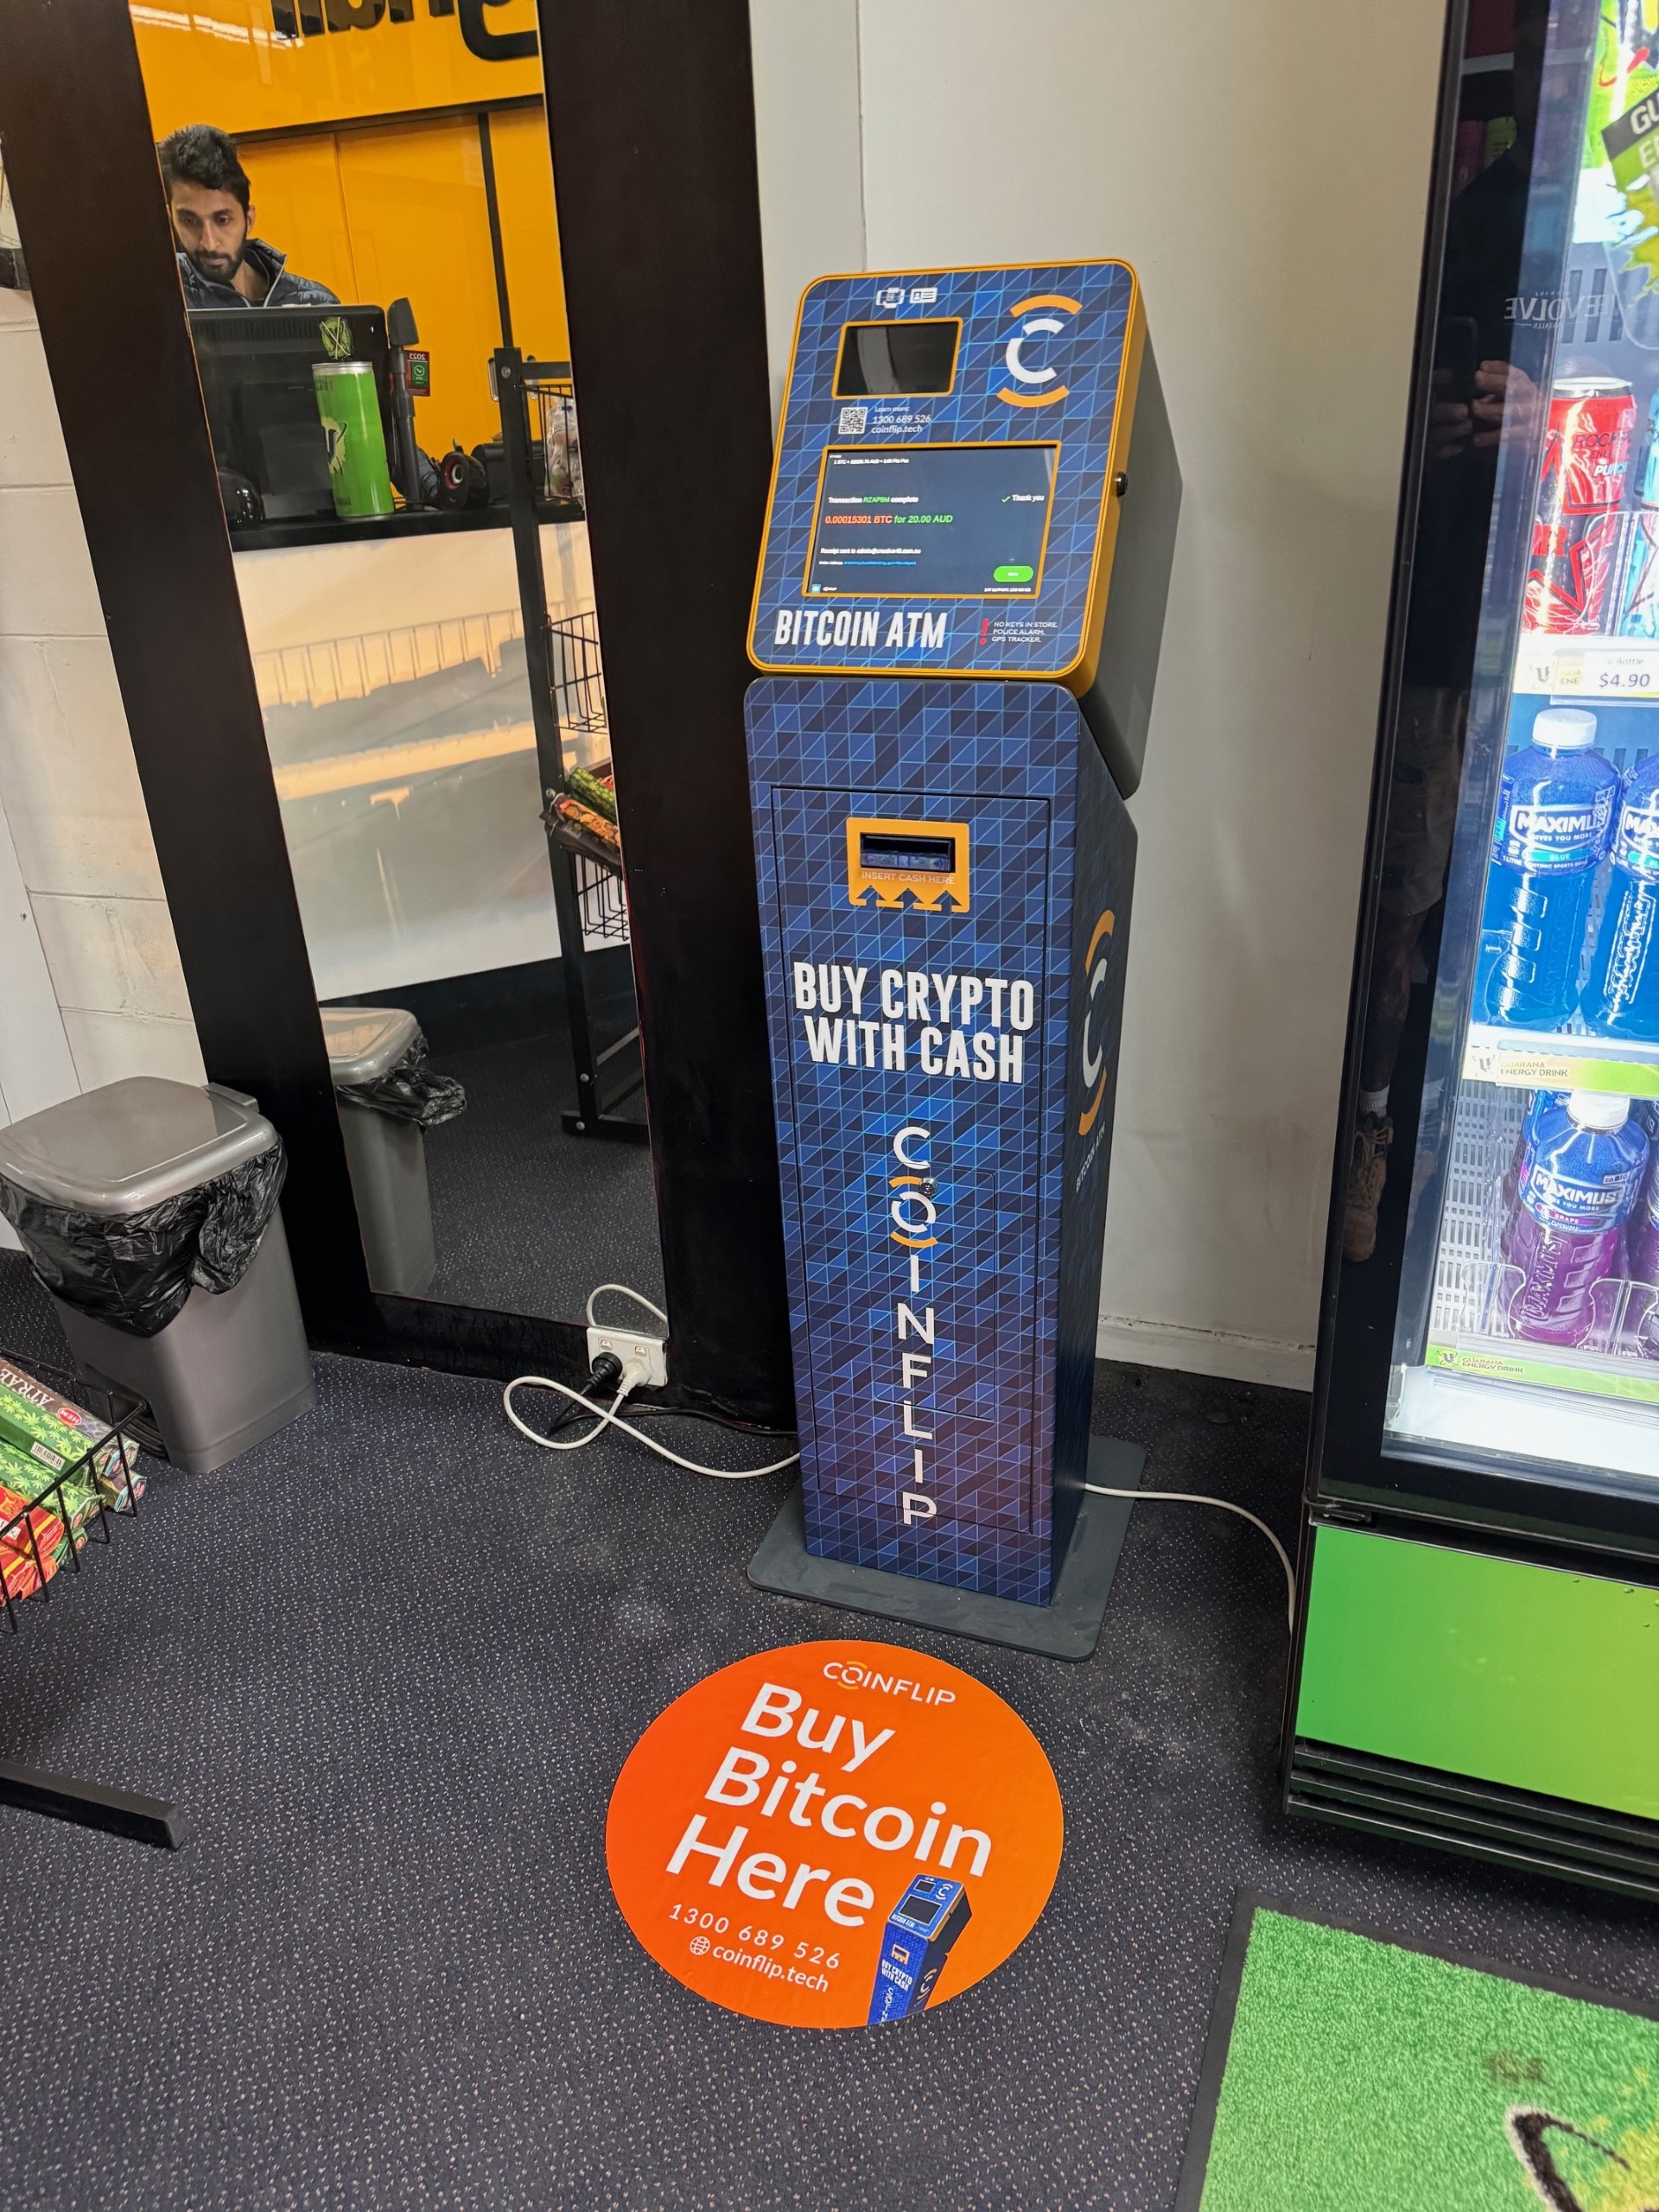 CoinFlip Bitcoin ATM - Cignall Bribie Island (Bellara) Bellara (13) 0068 9526